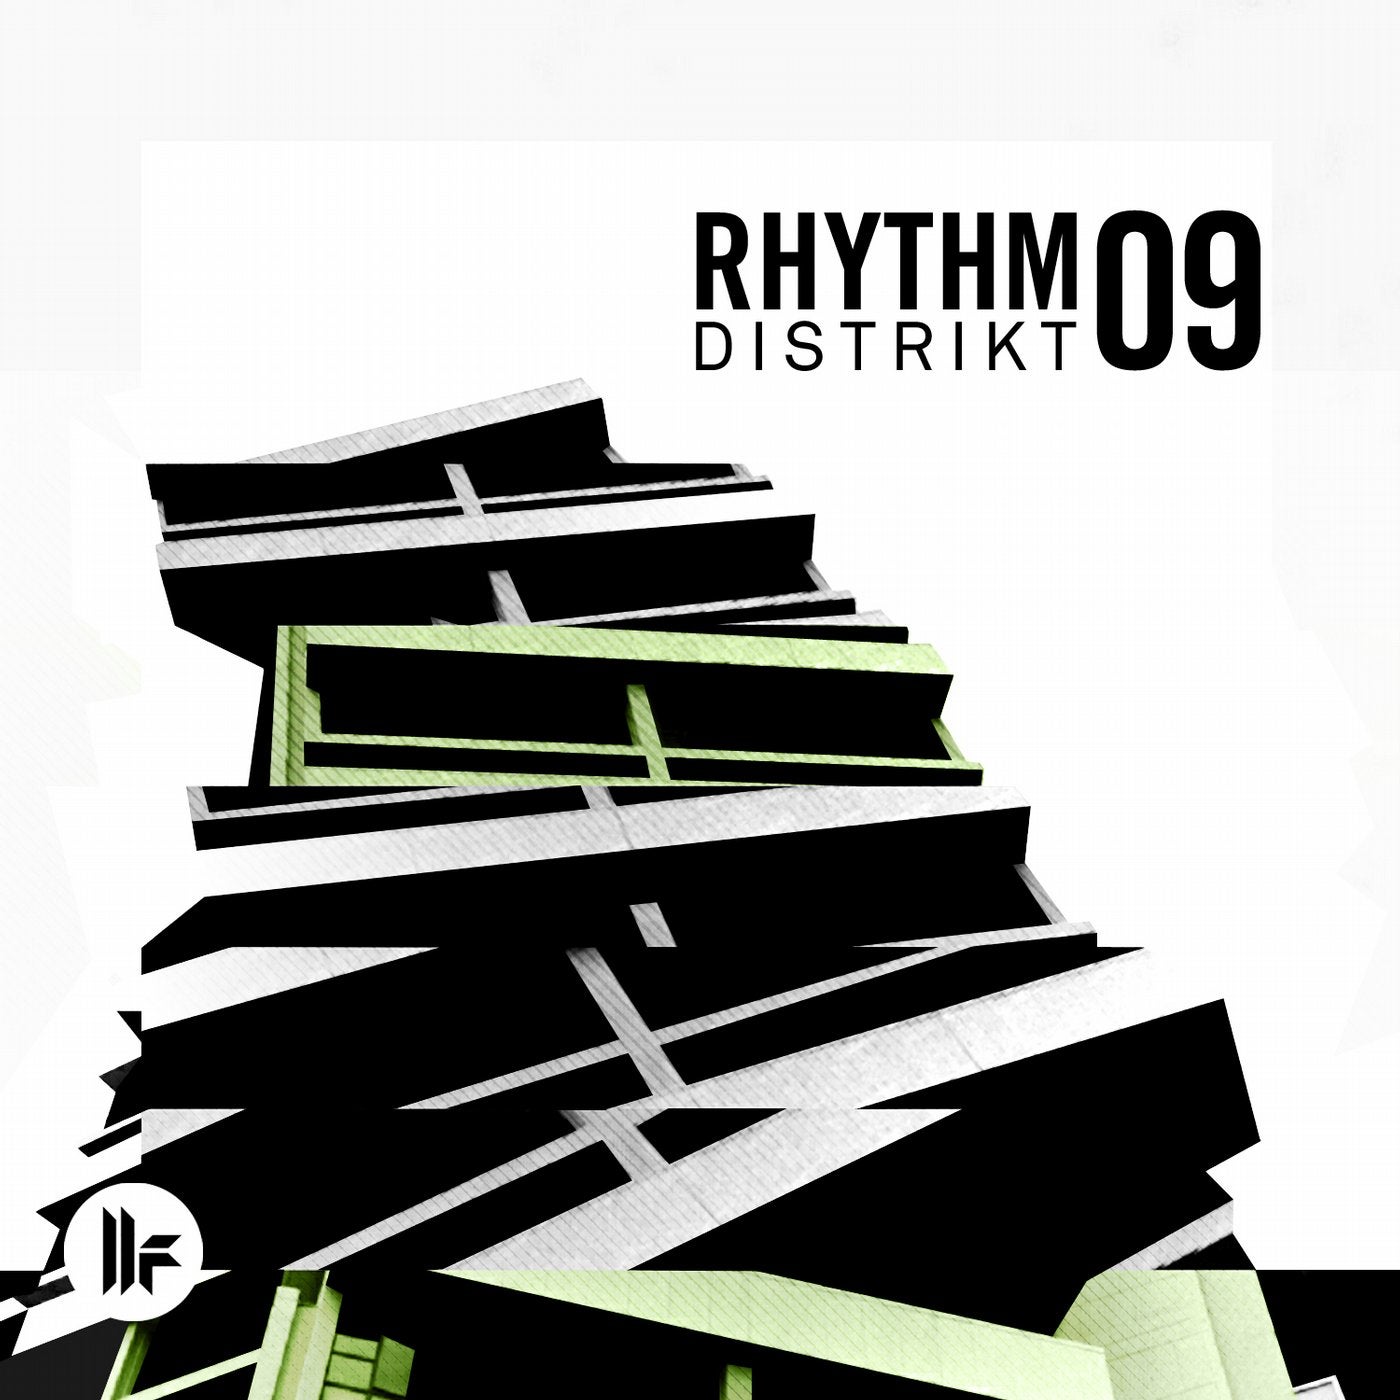 Night rhythm original mix. Spartaque альбом обложка. Логотип Spartaque. Toolroom records обложки без текста. Rhythm on the ready.